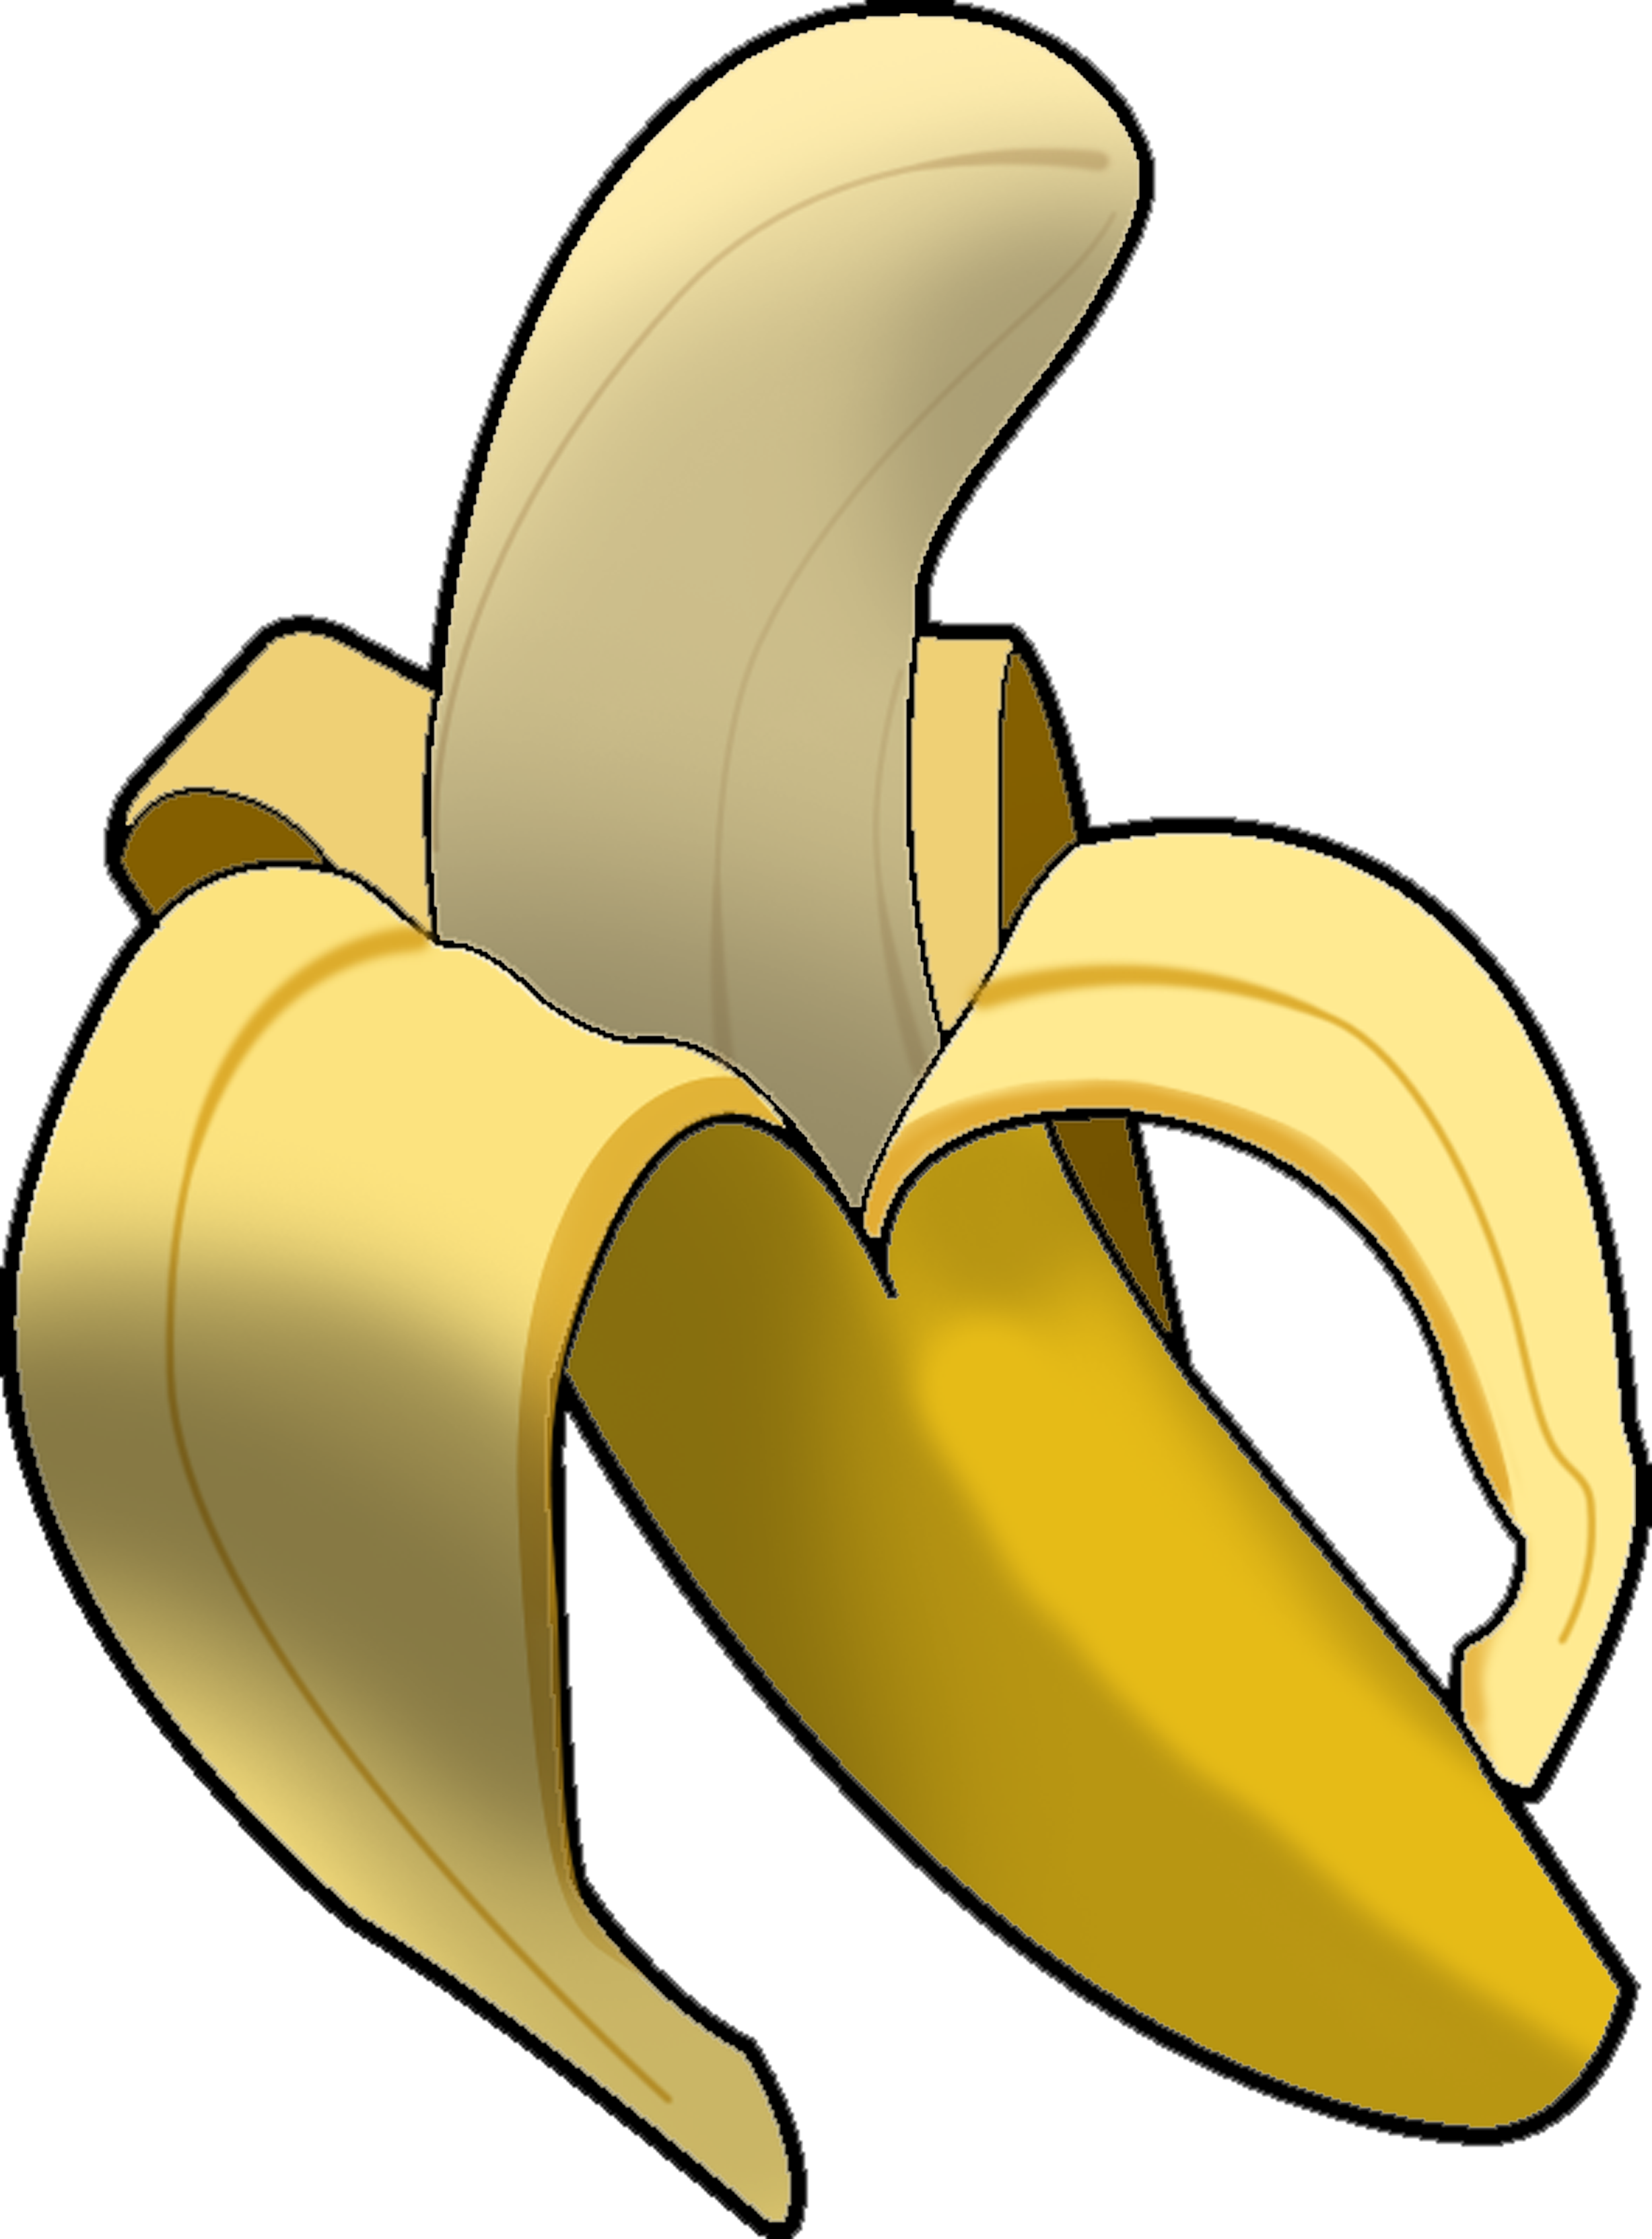 Banana Cartoon Picture Cliparts.co